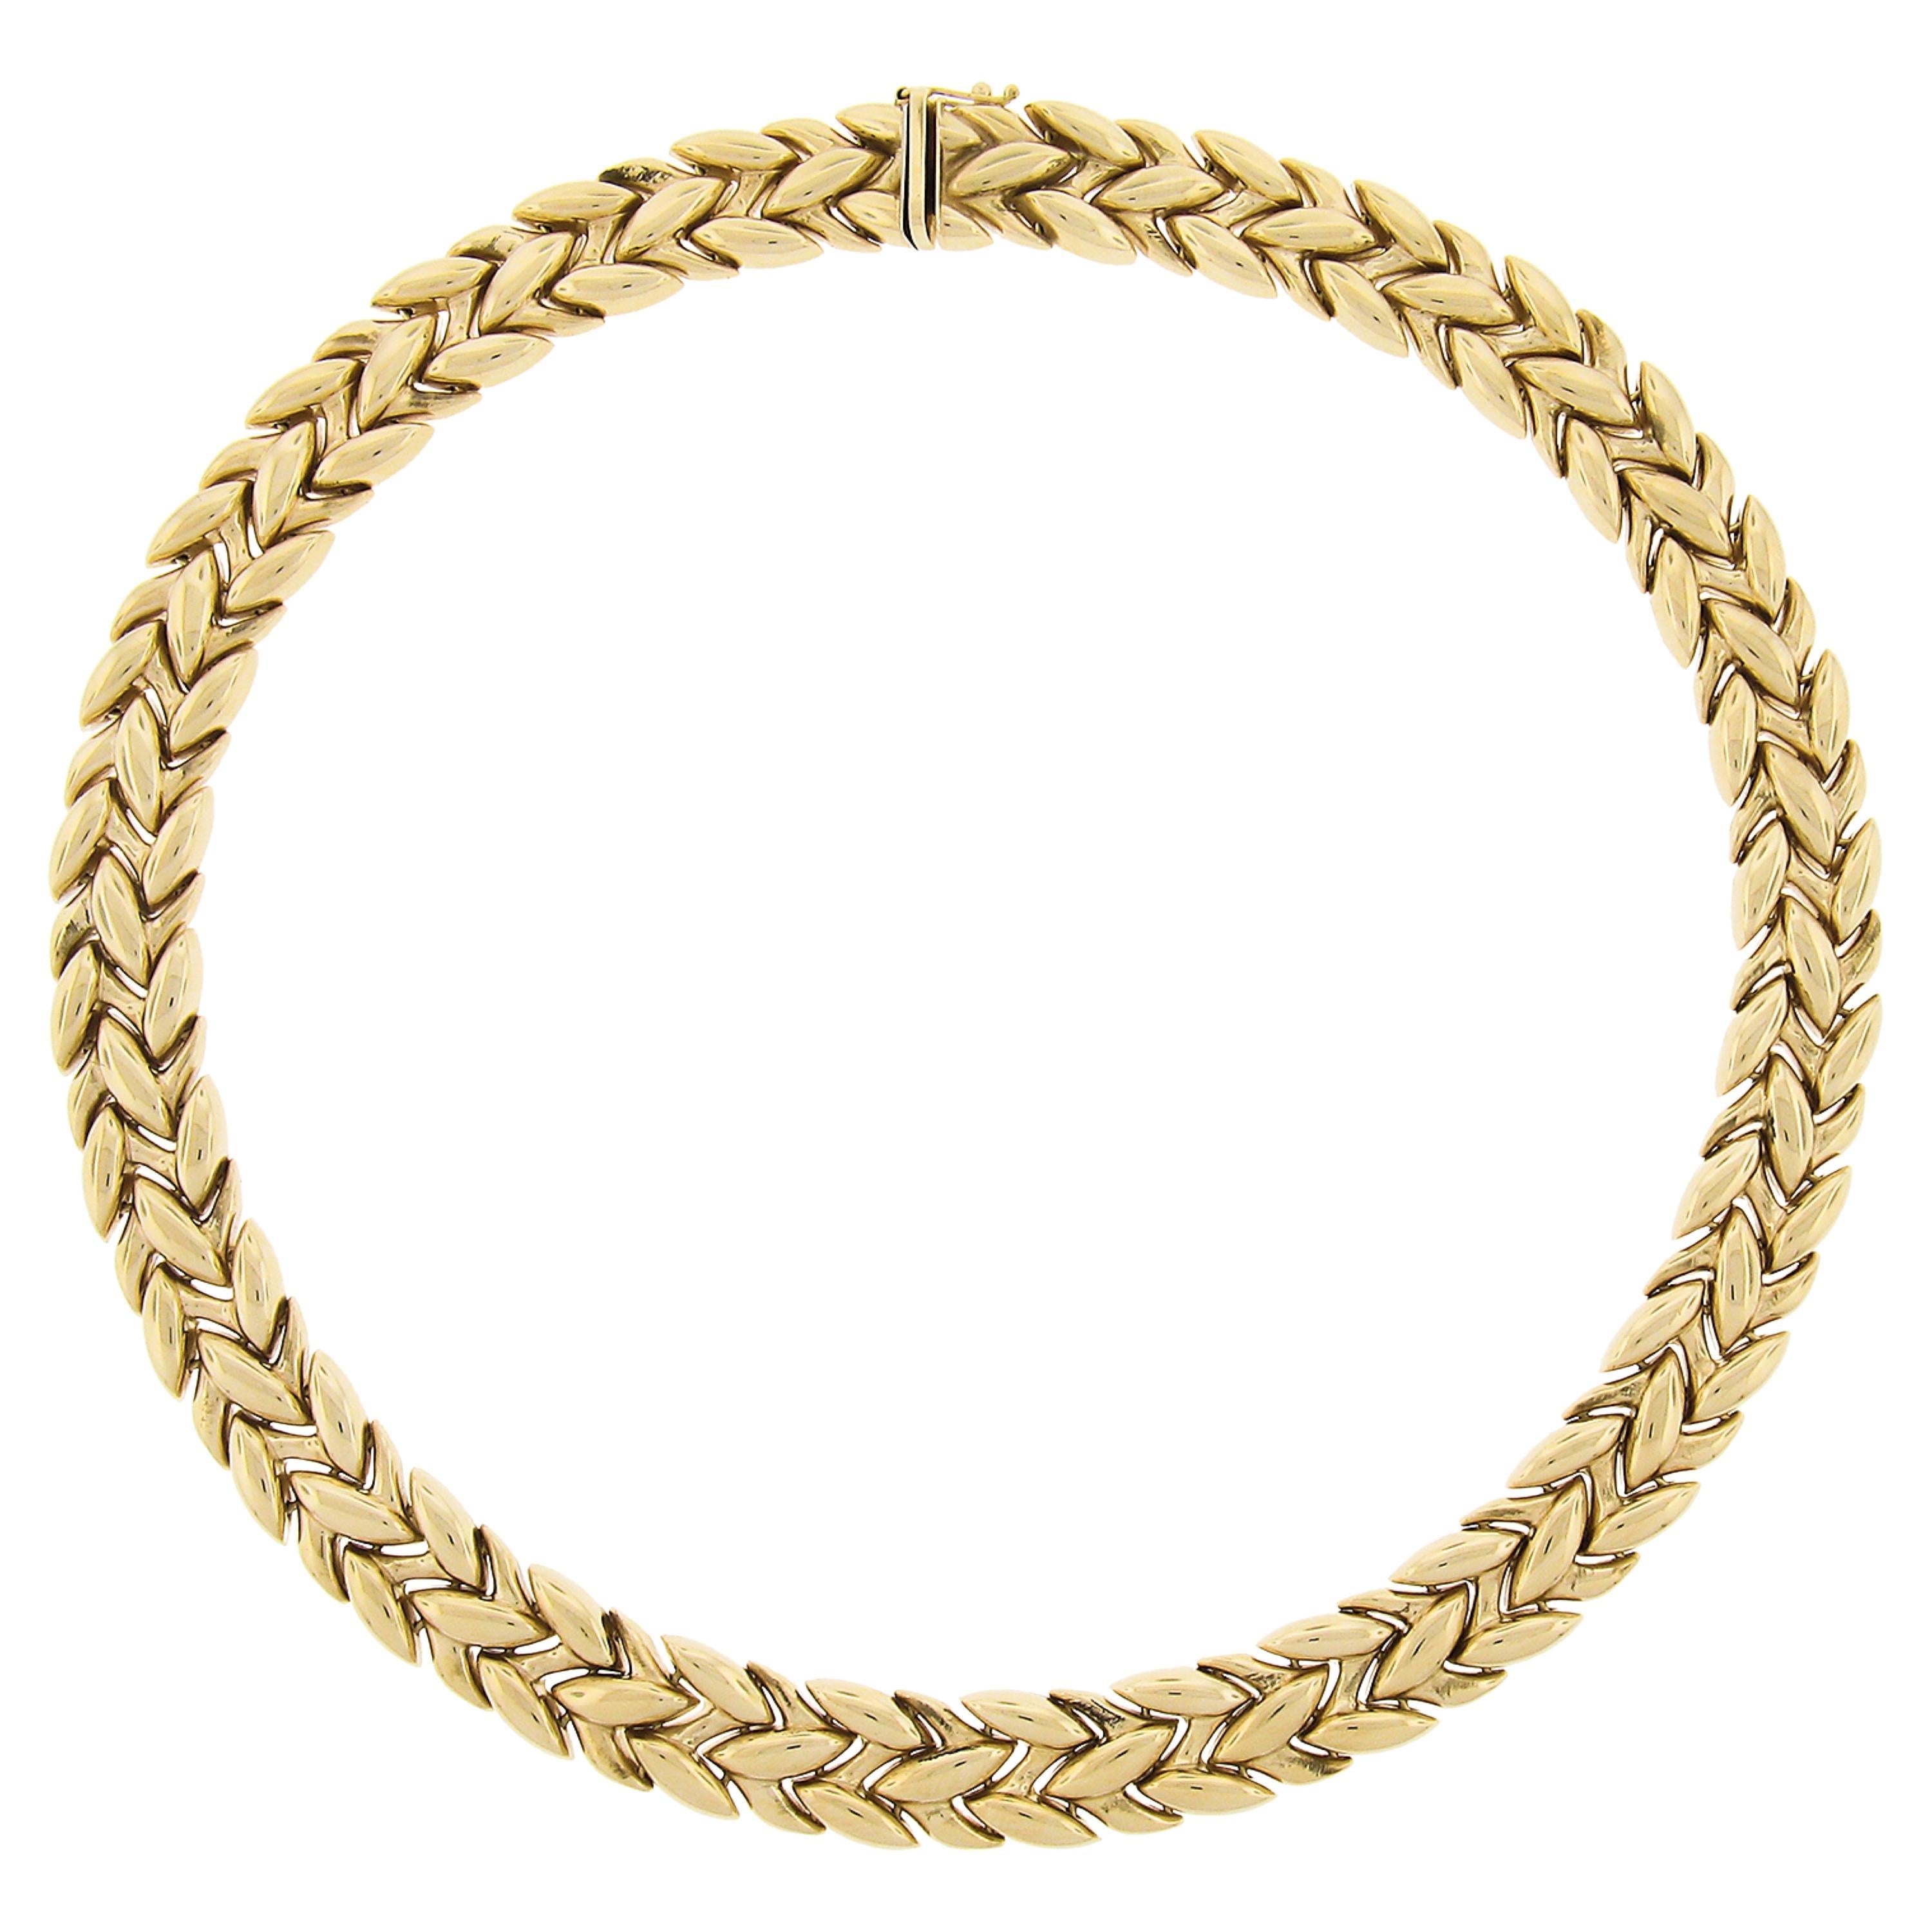 Nachlass 14k Gelbgold polierte Olivblatt Gliederkette Choker Halskette